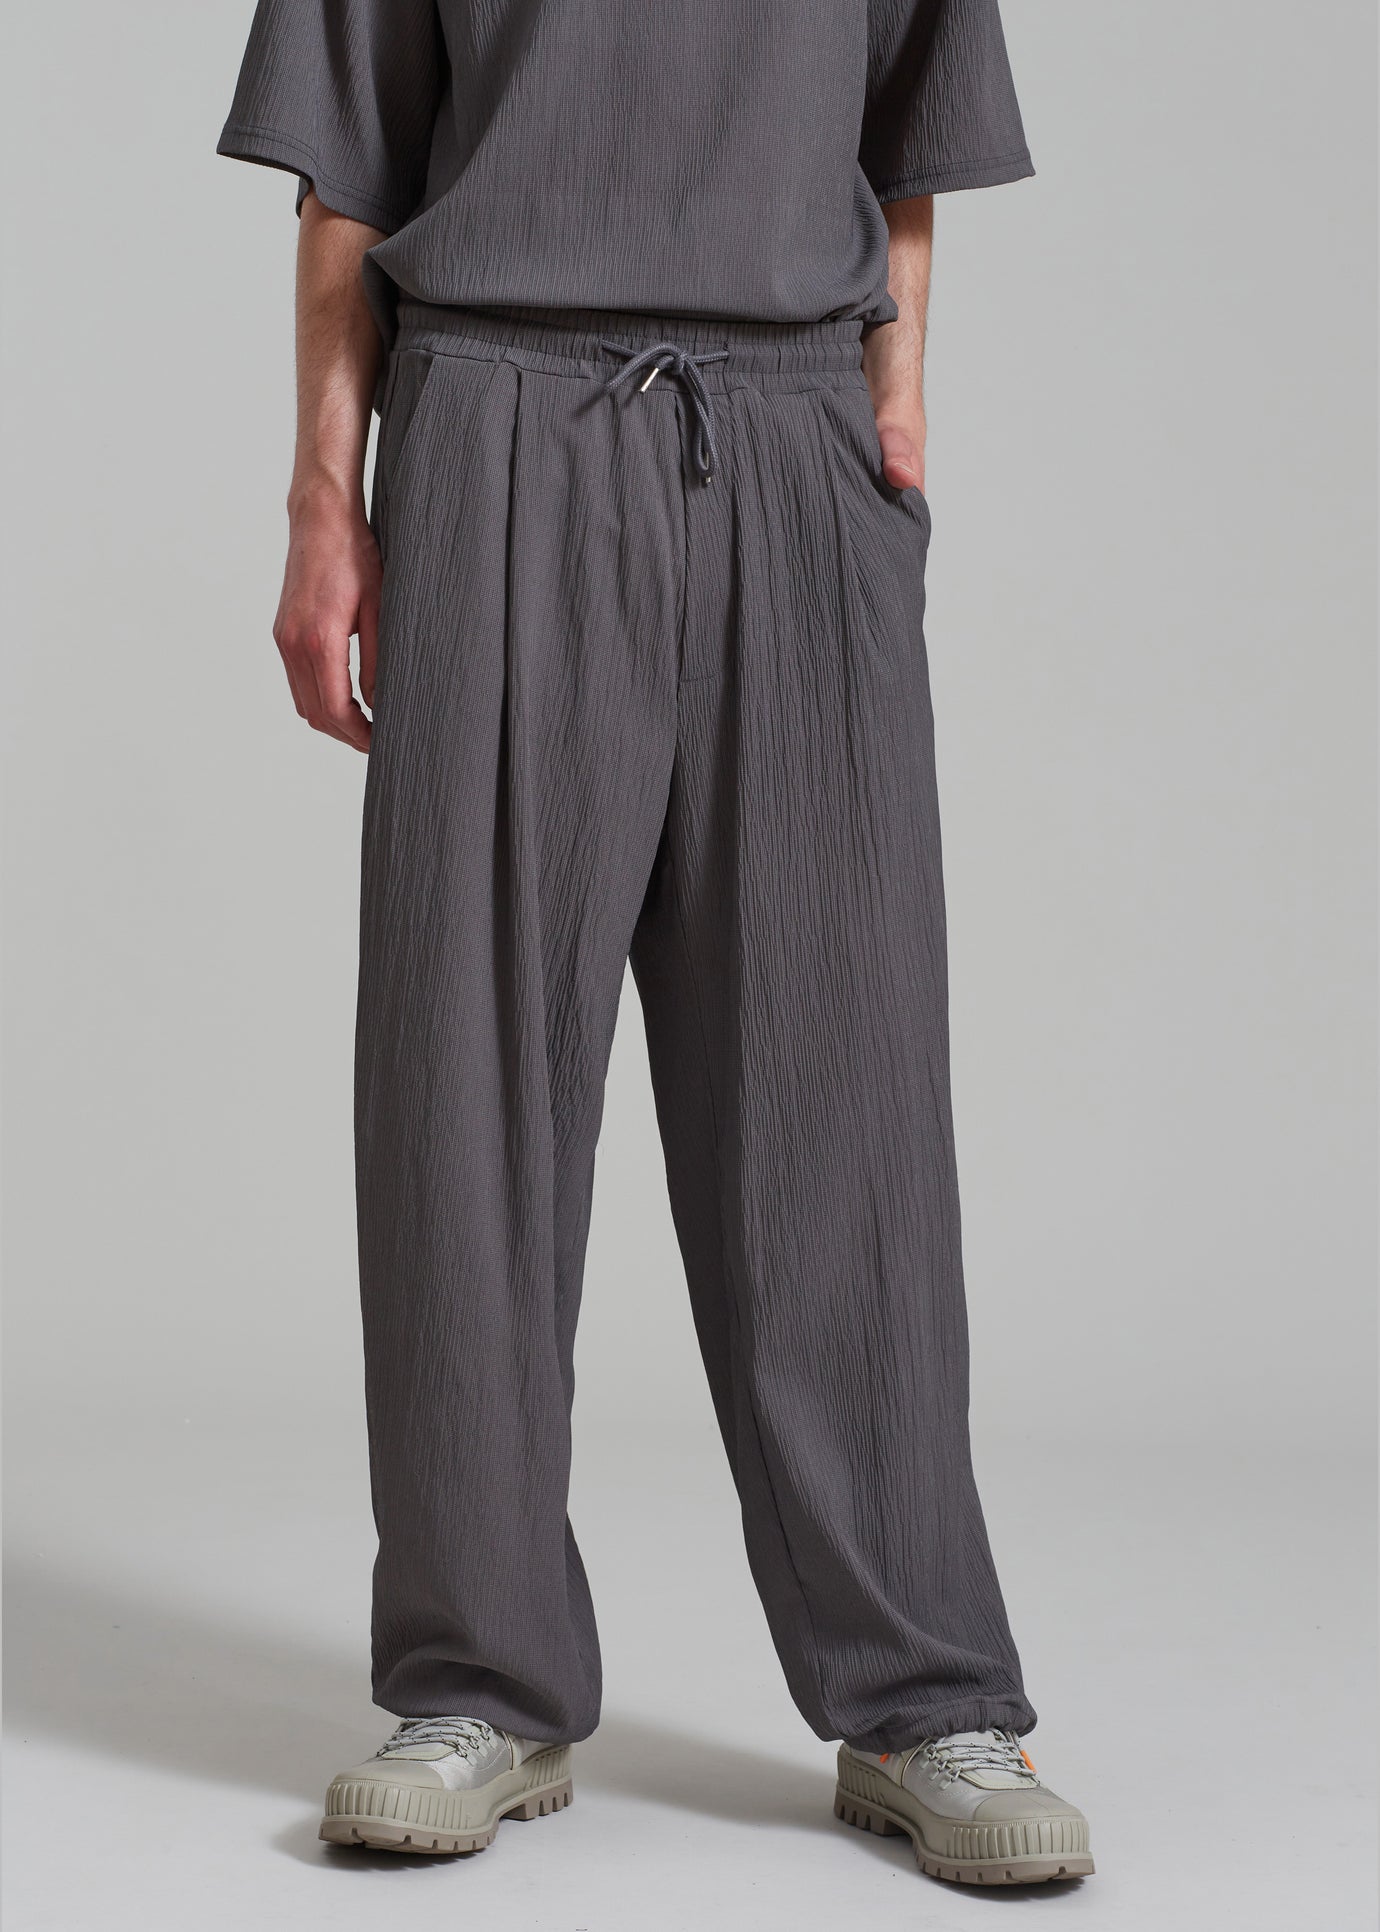 Eliott Crinkle Pants - Charcoal